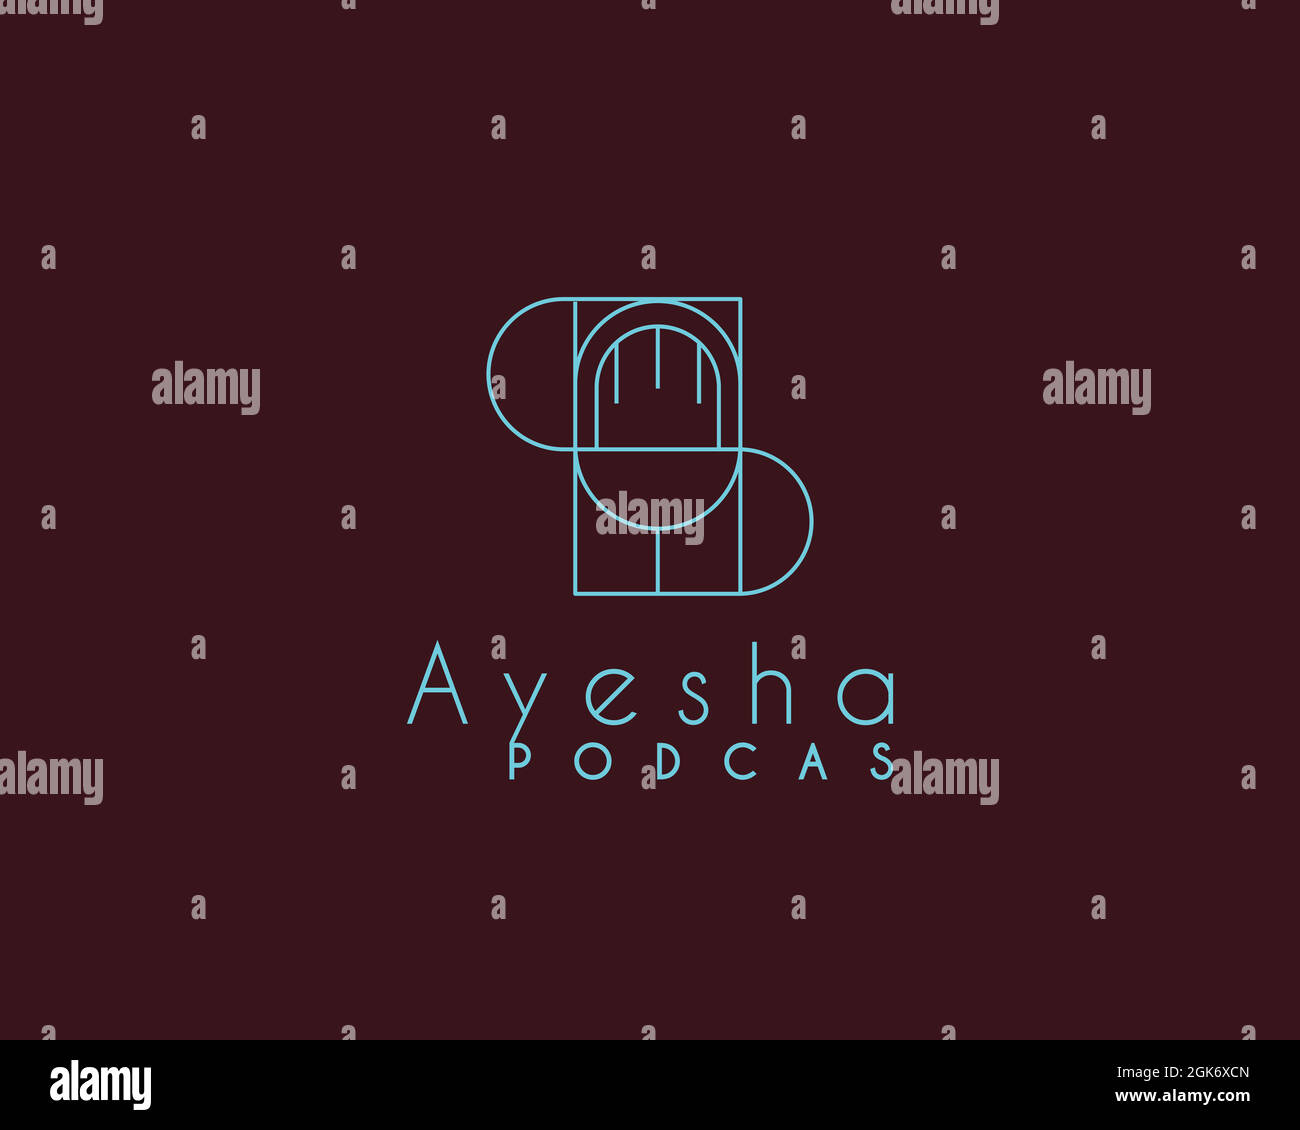 logo name Ayesha usable logo design for private logo, business ...